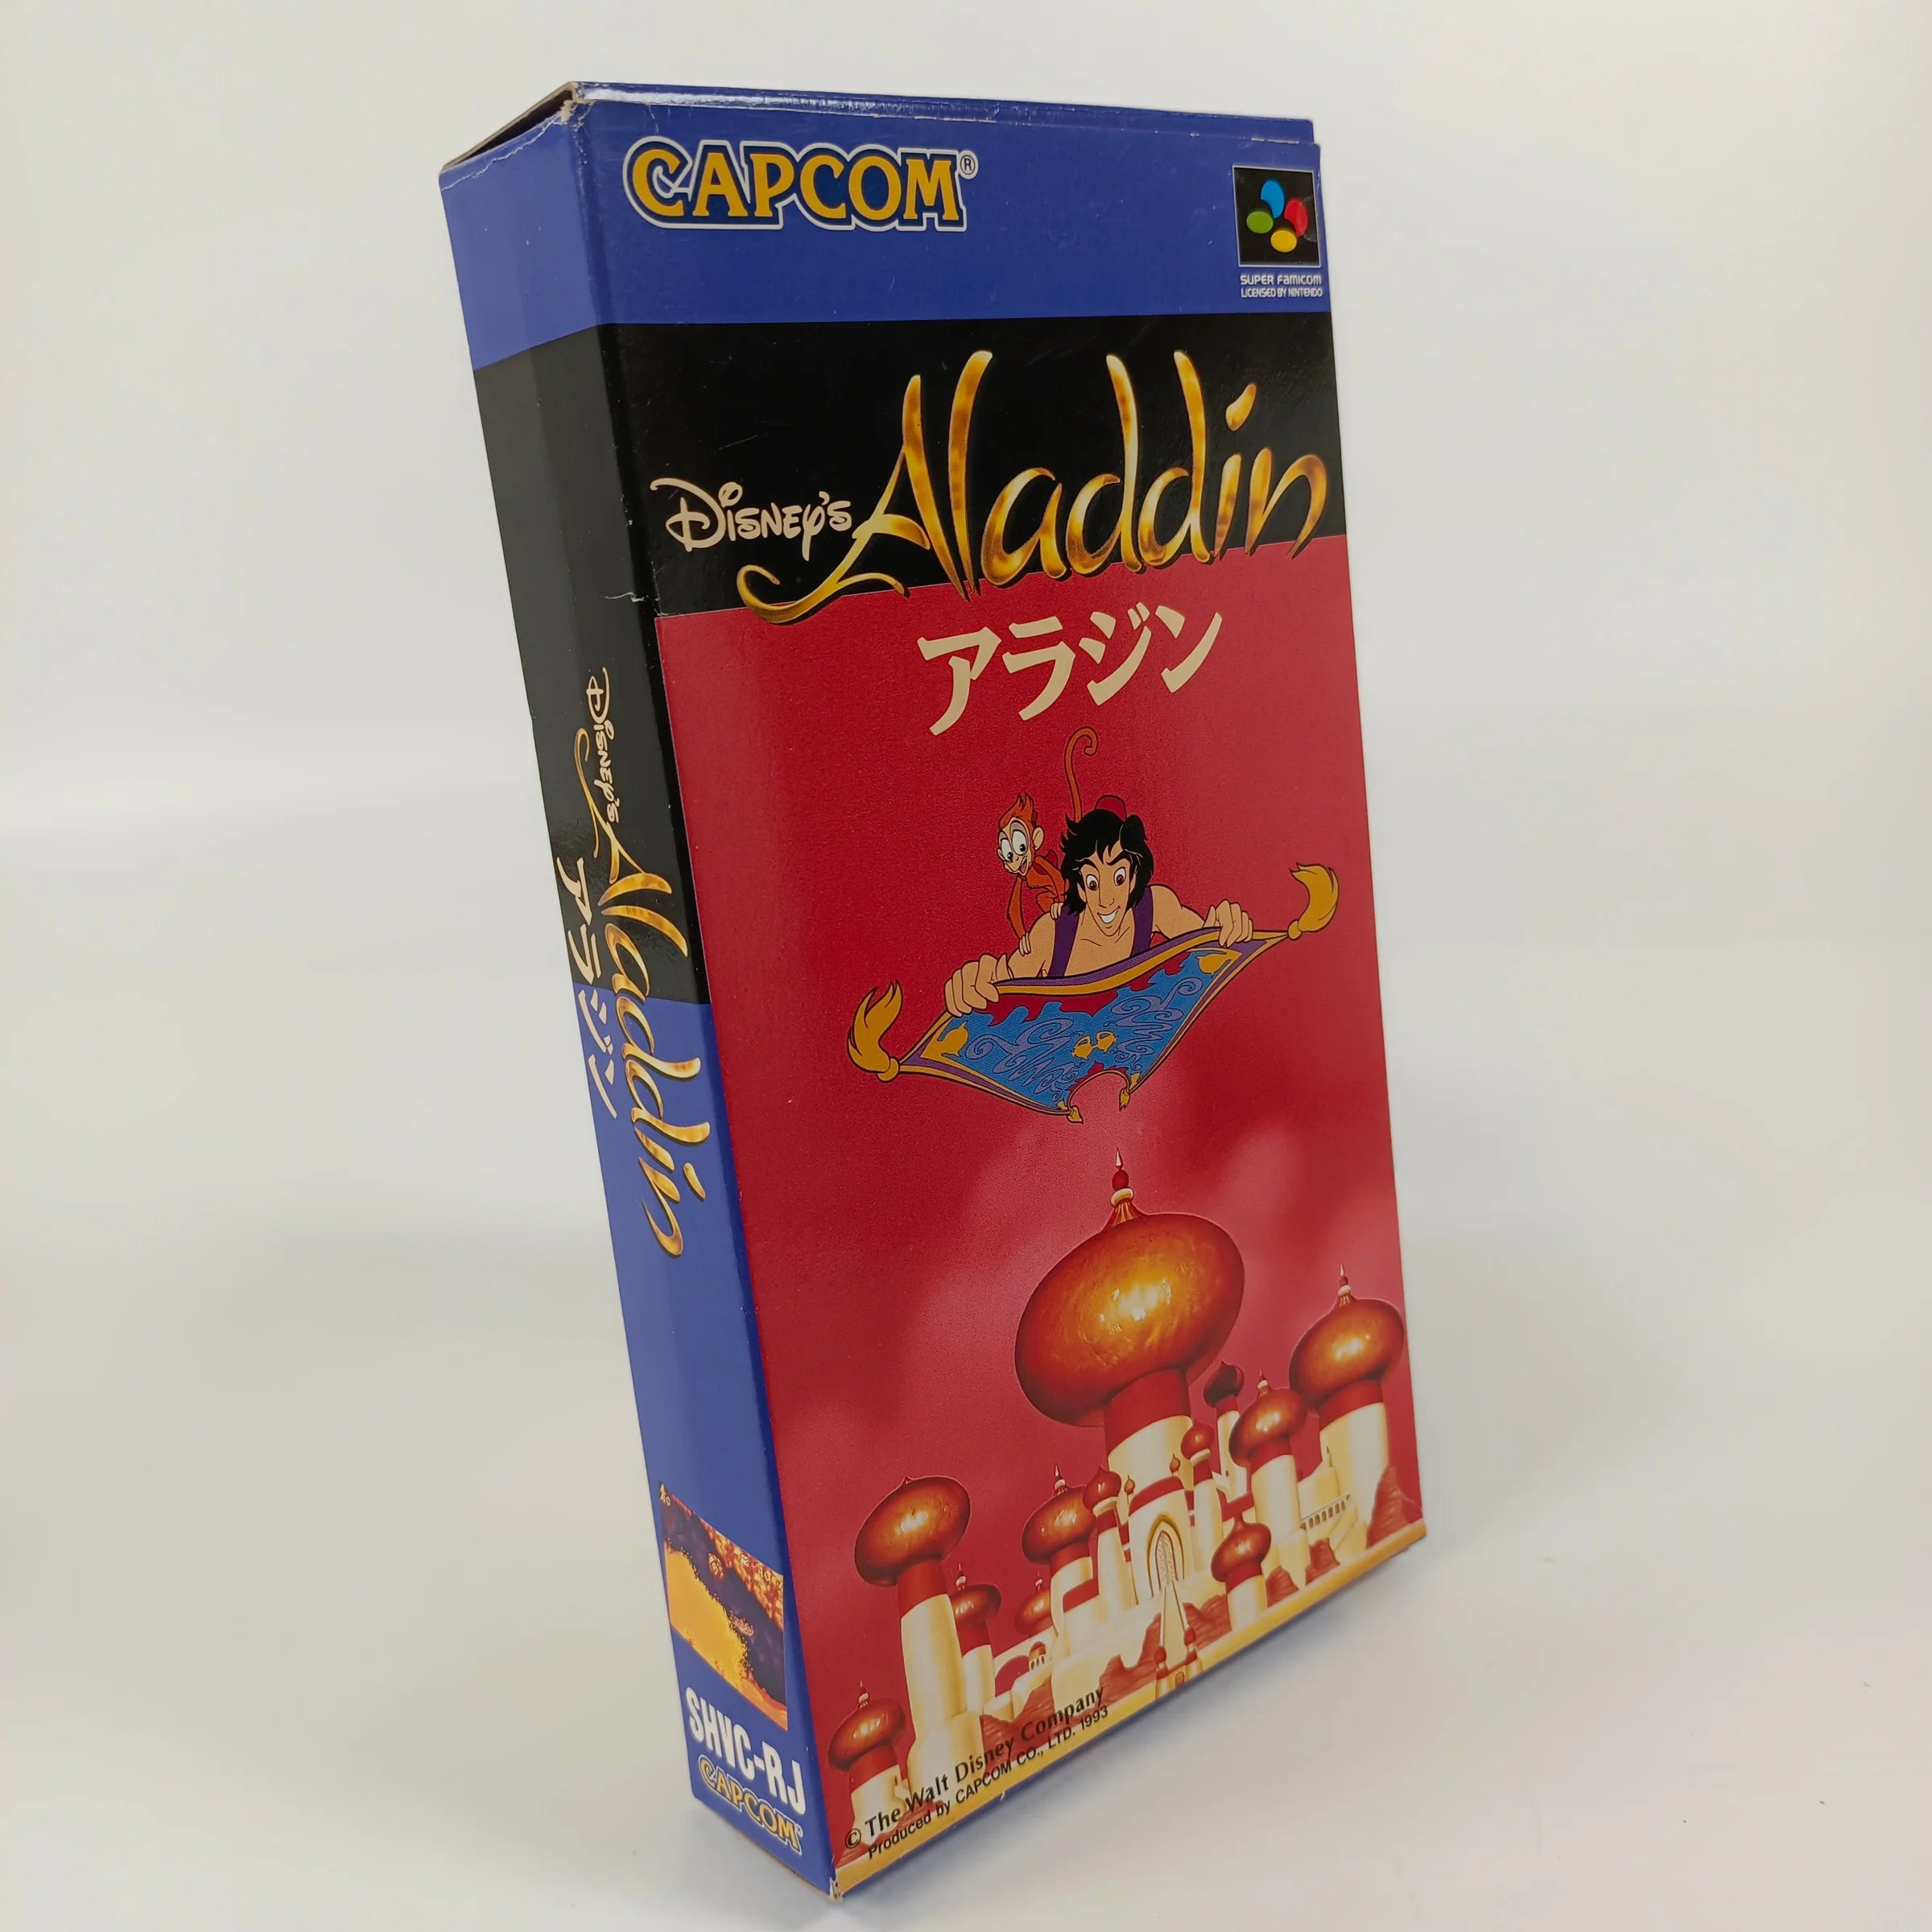 Game Boy Color RED – TokyoLoots